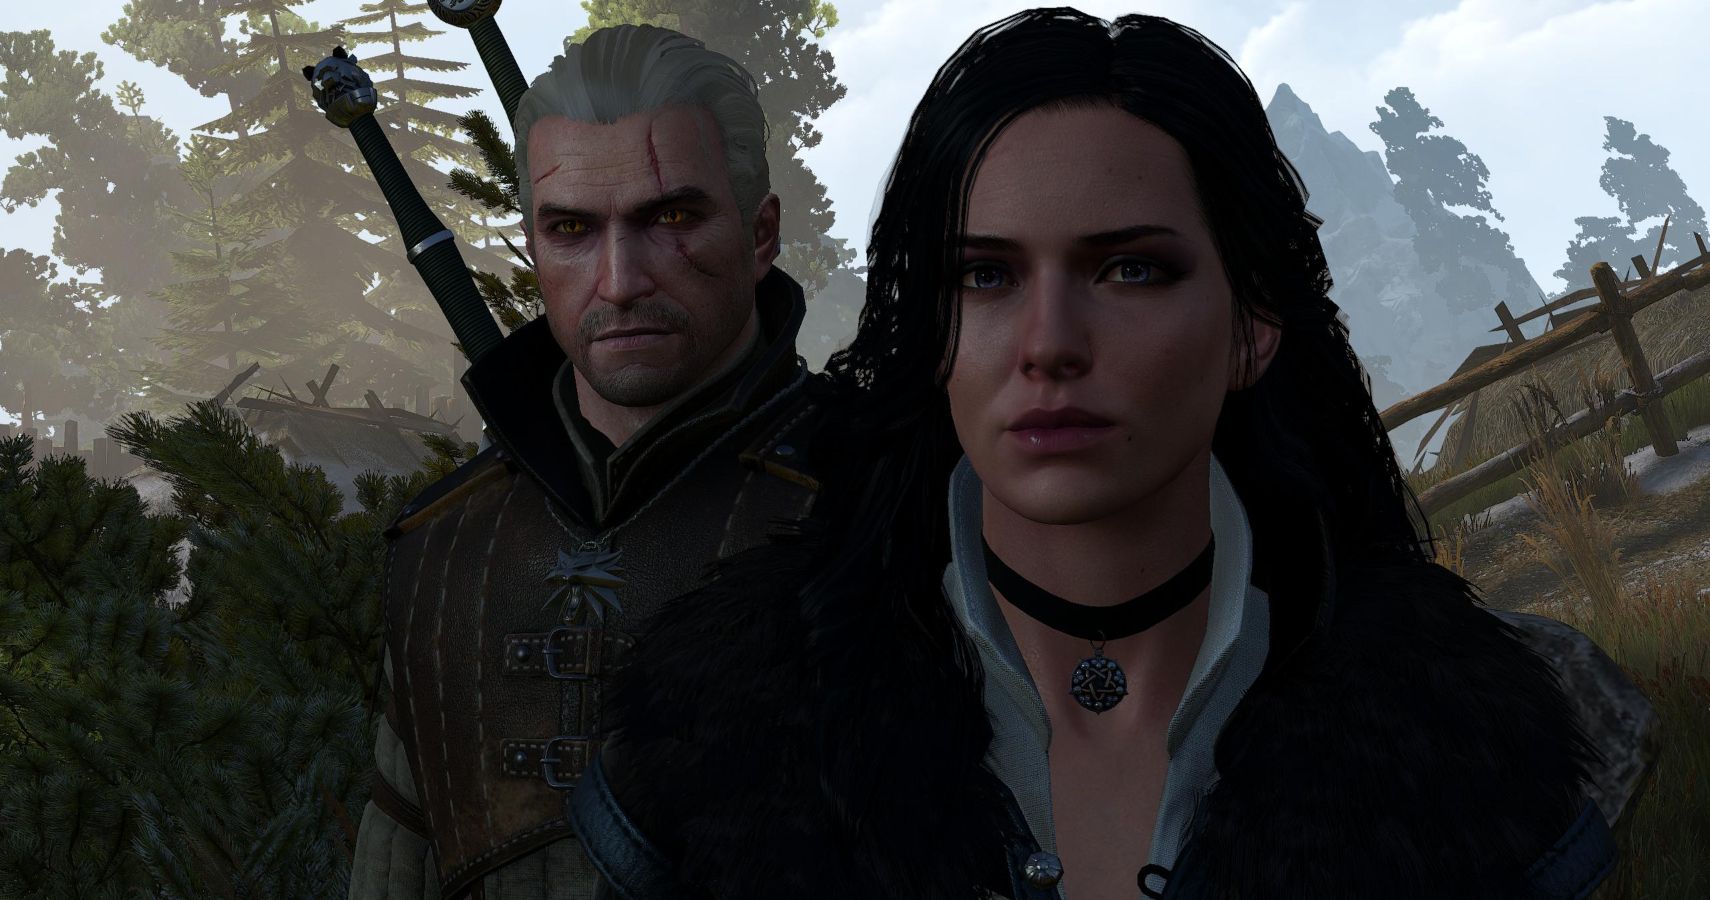 Captura de pantalla de Witcher 3 de Geralt detrás de Yennefer